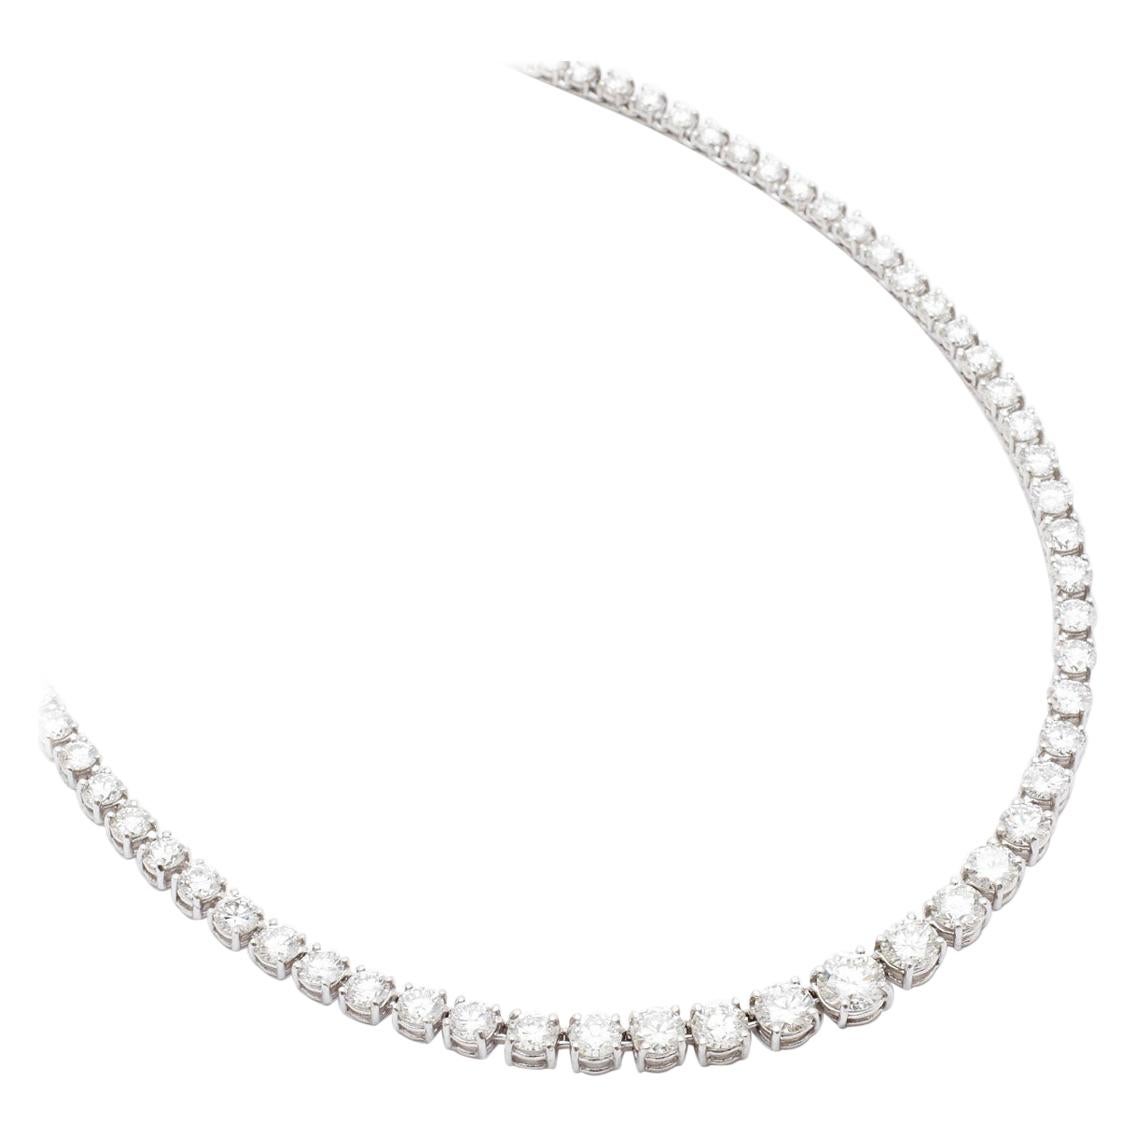 10.16 Carat Total Riviera Diamond Necklace in 14 Karat White Gold